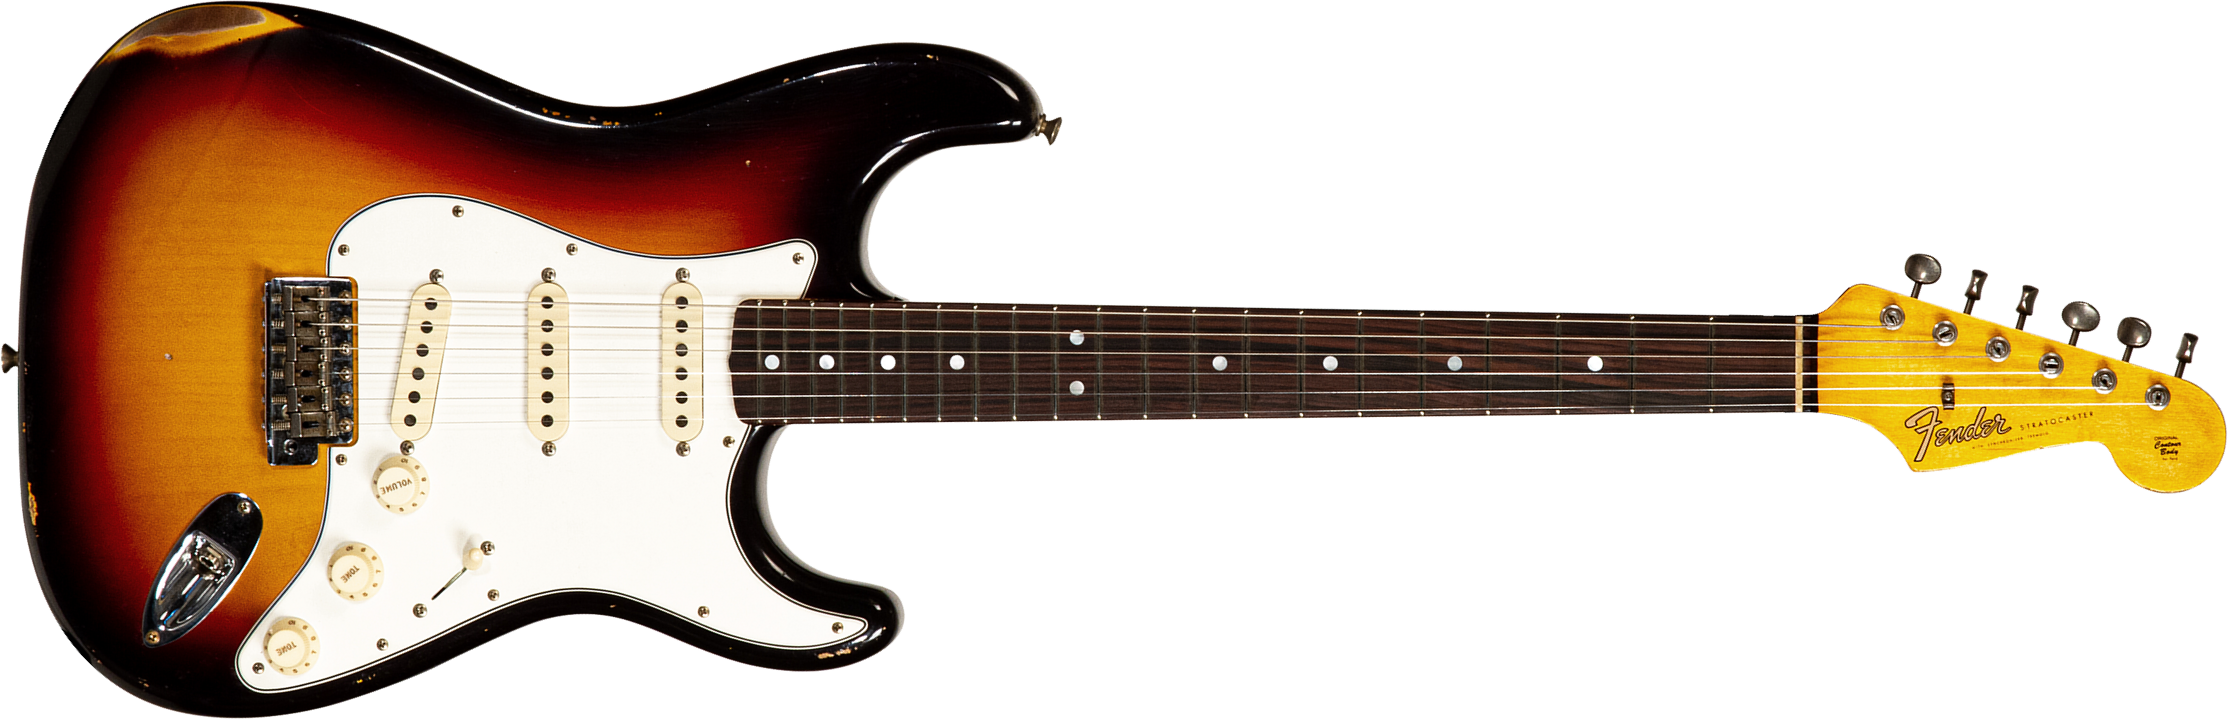 Fender Custom Shop Strat Late 64 3s Trem Rw #cz568169 - Relic Target 3-color Sunburst - Elektrische gitaar in Str-vorm - Main picture